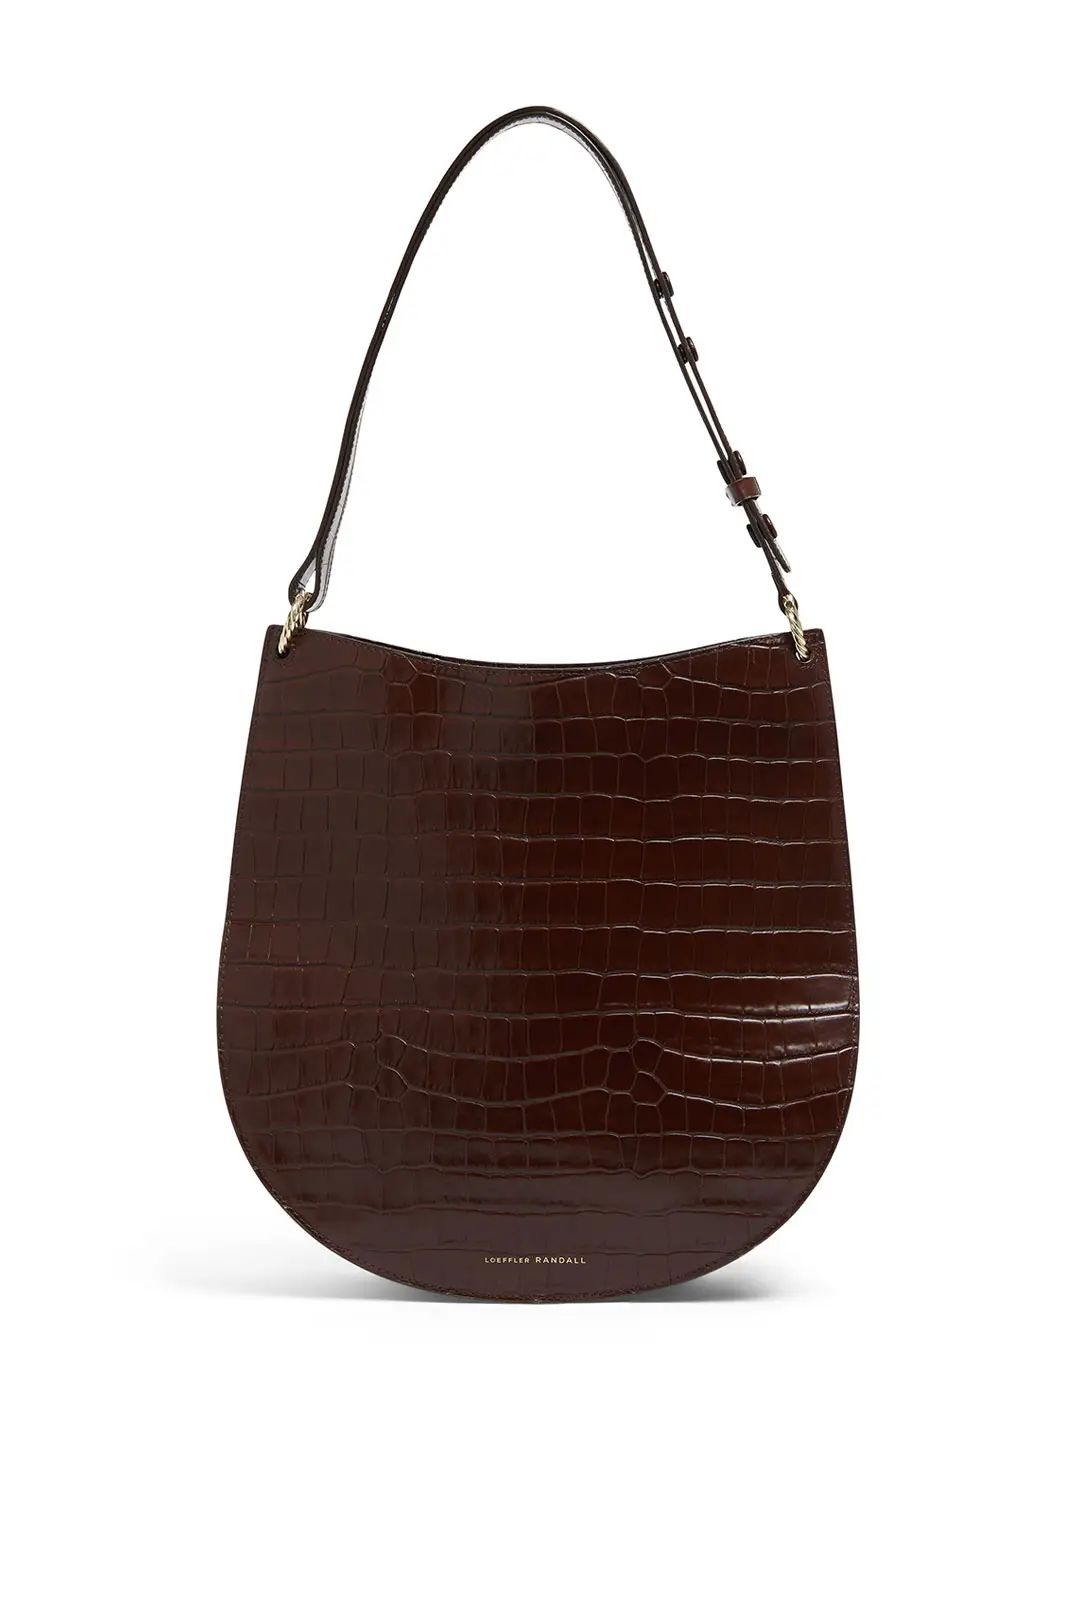 Loeffler Randall Chocolate Caroline Twisted Ring Leather Hobo Bag | Rent the Runway